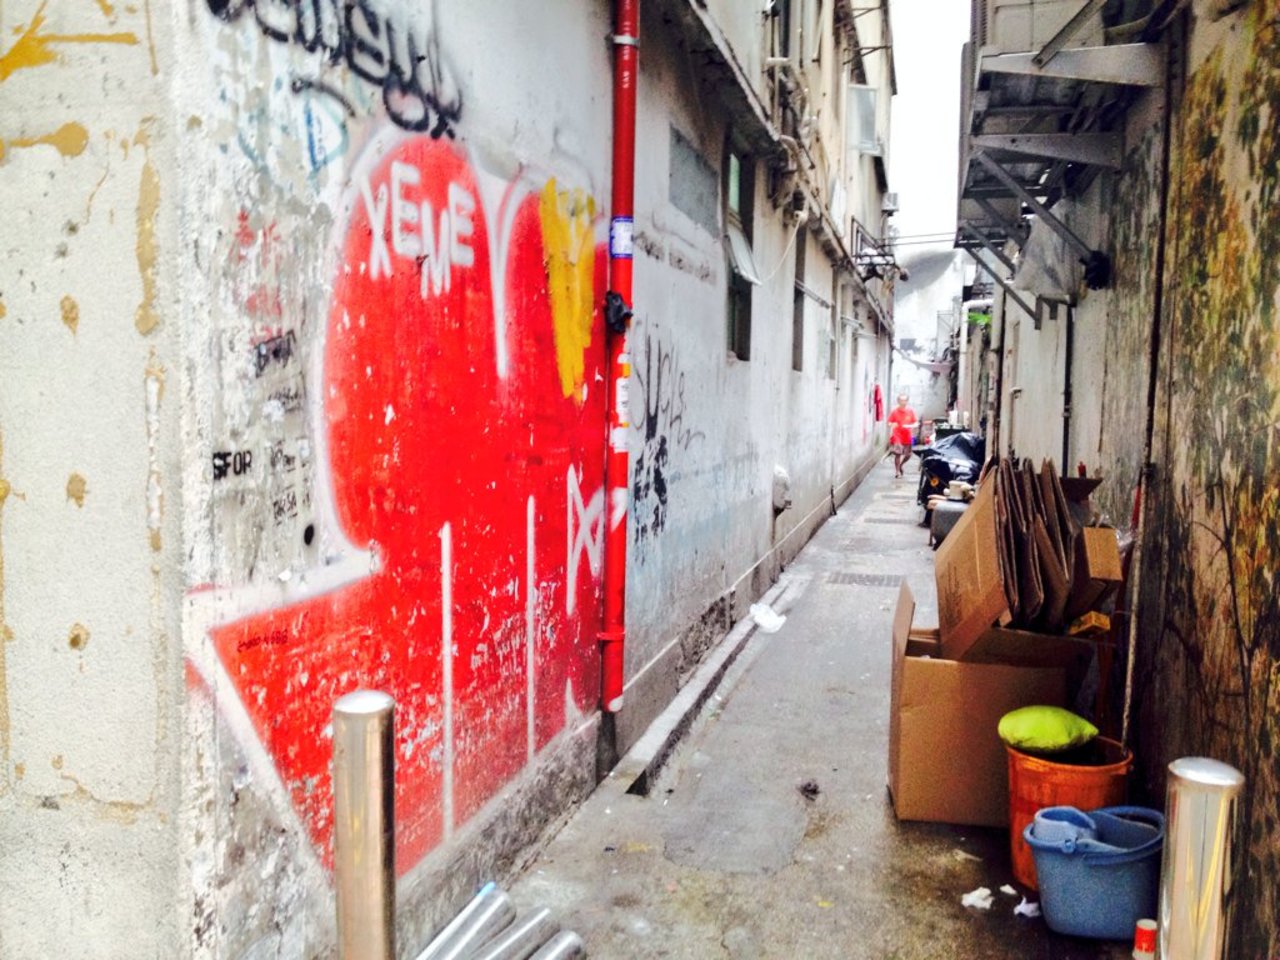 Causeway Bay alleyway
#streetart #urbanart #graffiti #stencil #tag #DonneGraffiti #HongKong #streetphotography https://t.co/zHwjIJQG74